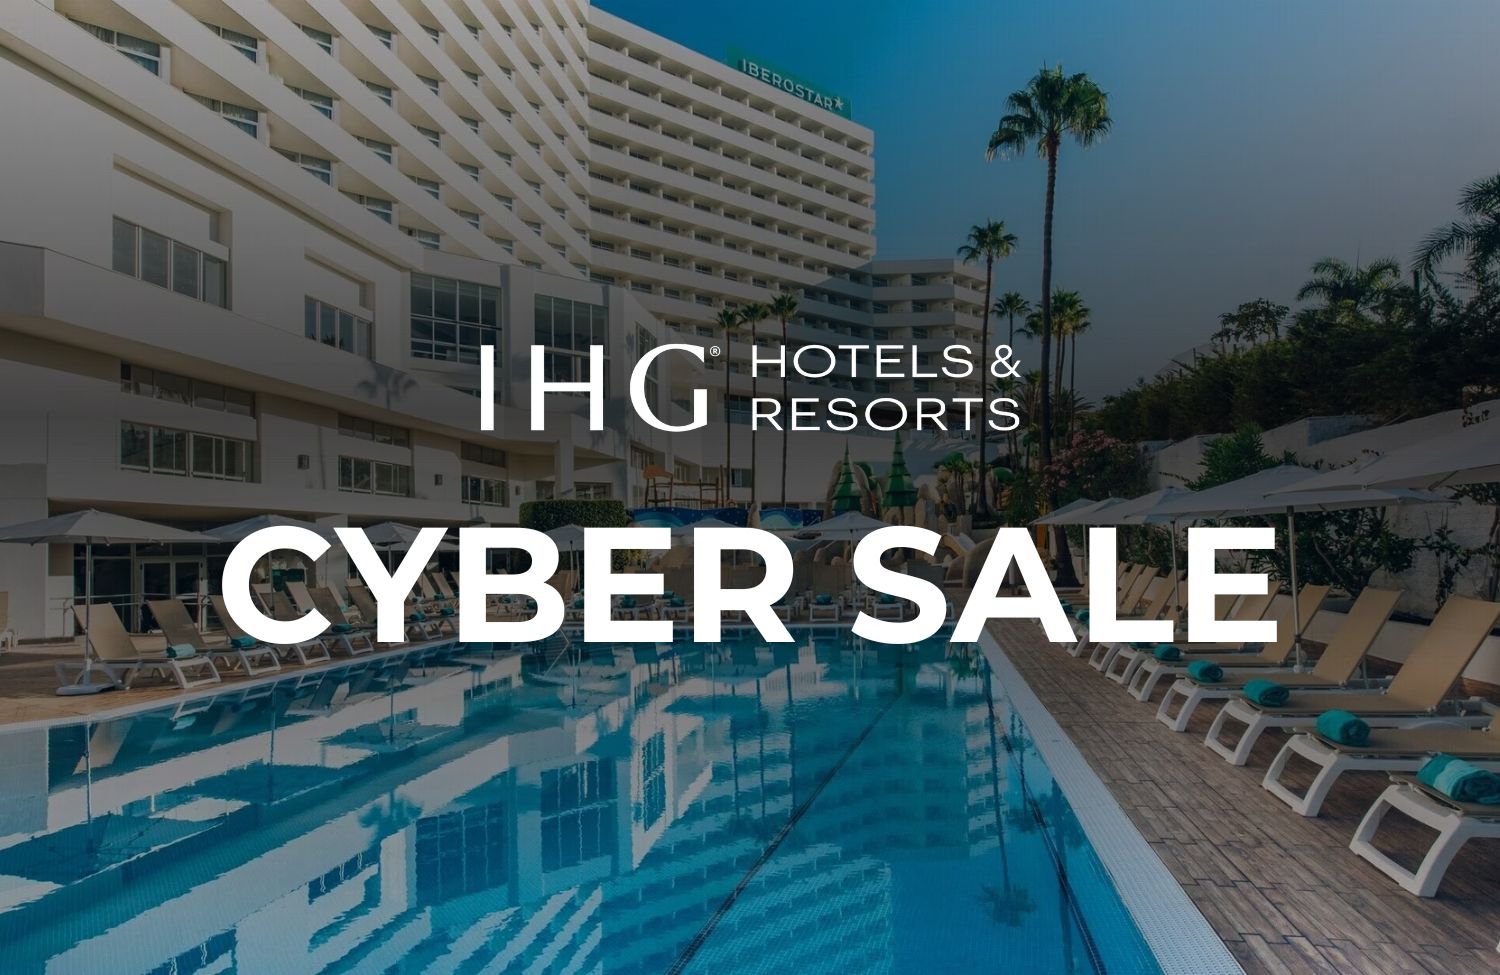 IHG Cyber Sale